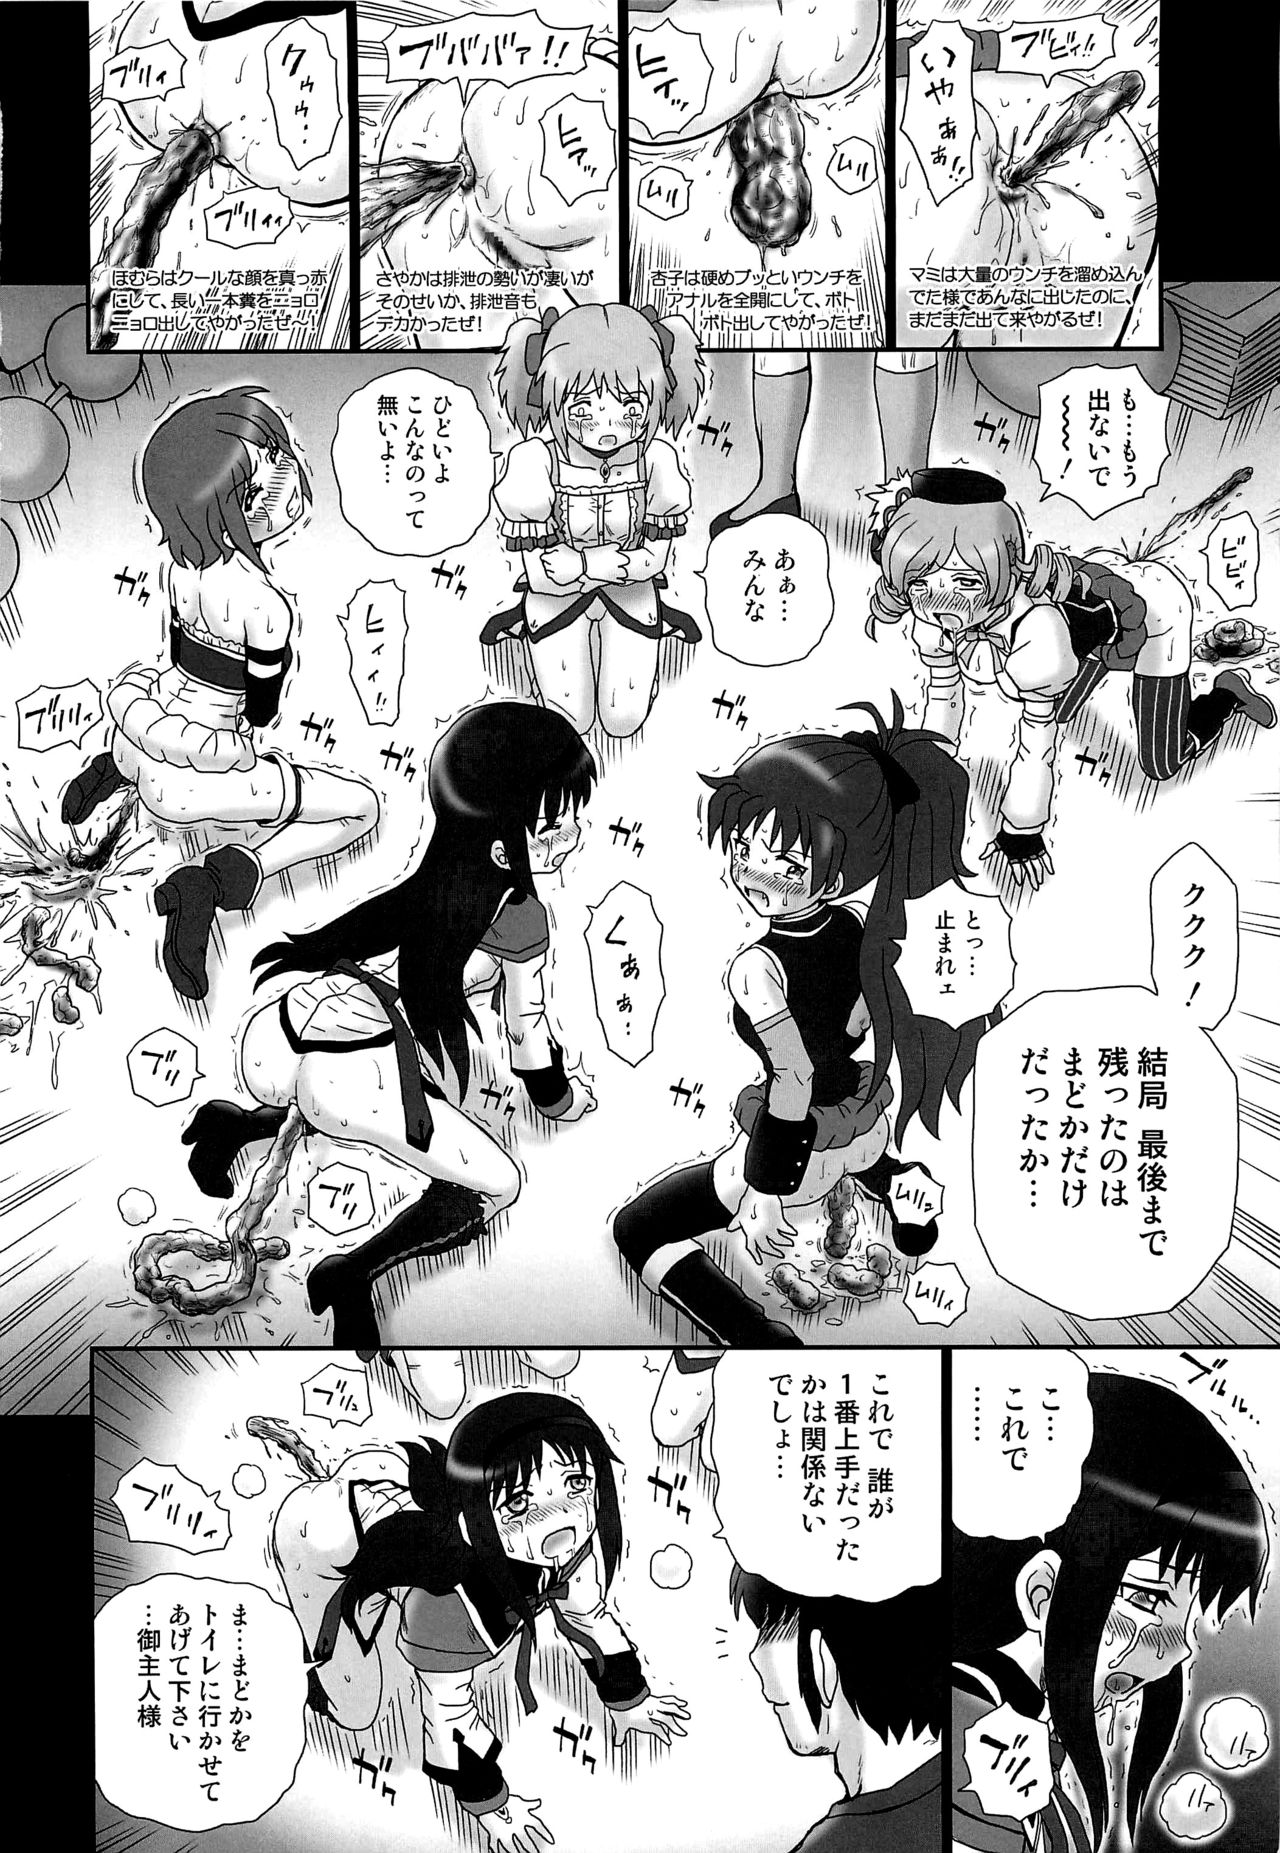 (COMIC1☆6) [Rat Tail (Irie Yamazaki)] TAIL-MAN MADO★MAGI 5GIRLS BOOK (Puella Magi Madoka Magica) (COMIC1☆6) [Rat Tail (Irie Yamazaki)] TAIL-MAN MADO★MAGI 5GIRLS BOOK (魔法少女まどか☆マギカ)